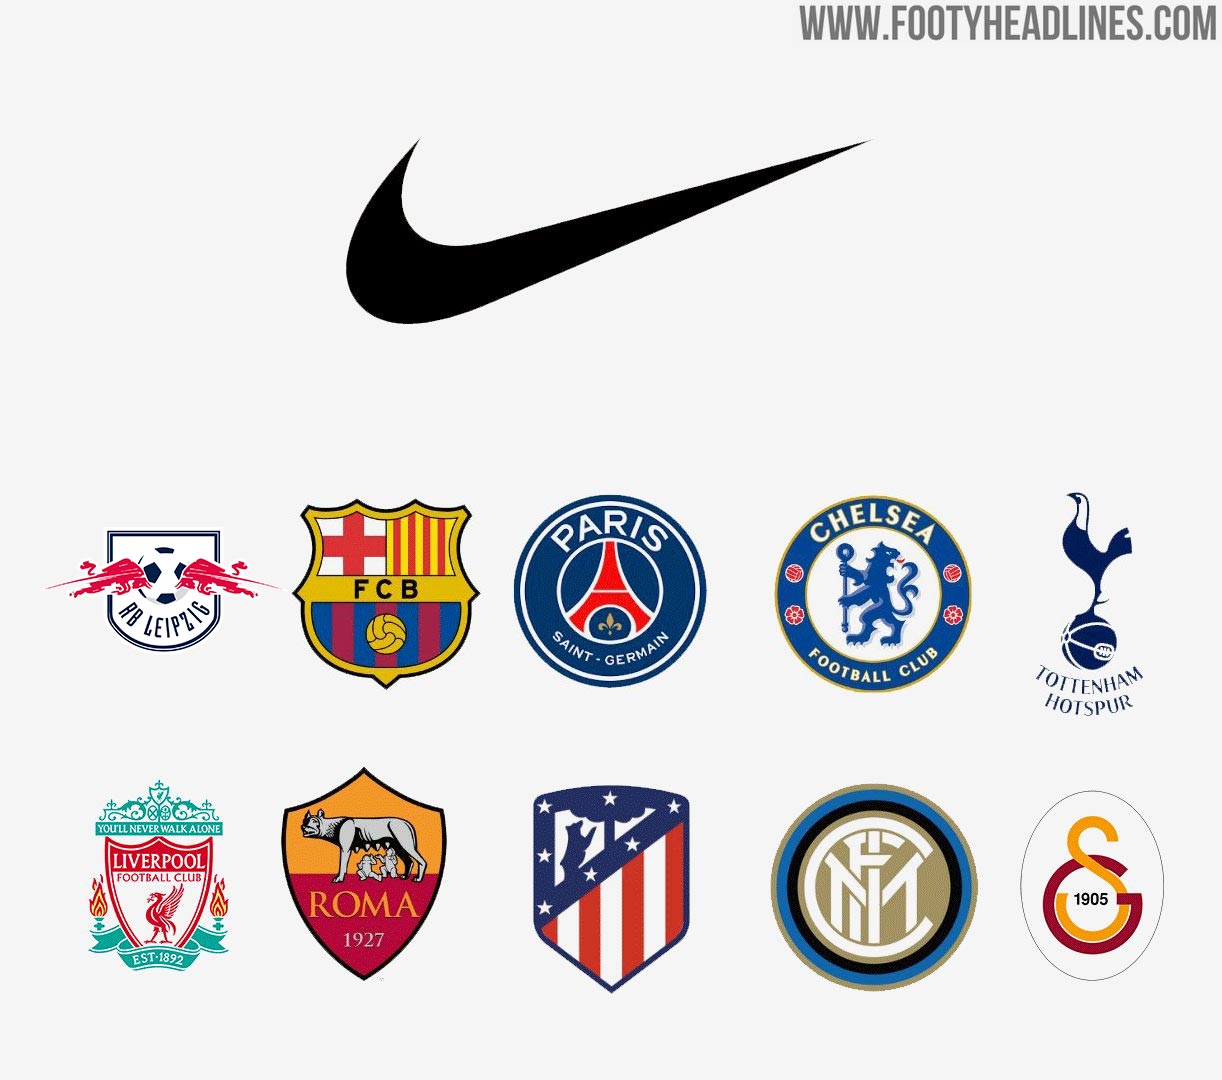 Nike's Pyramid Of Football Kit Sponsorship - Elite, Premium, Standard, Party Not Affiliated - Footy Headlines